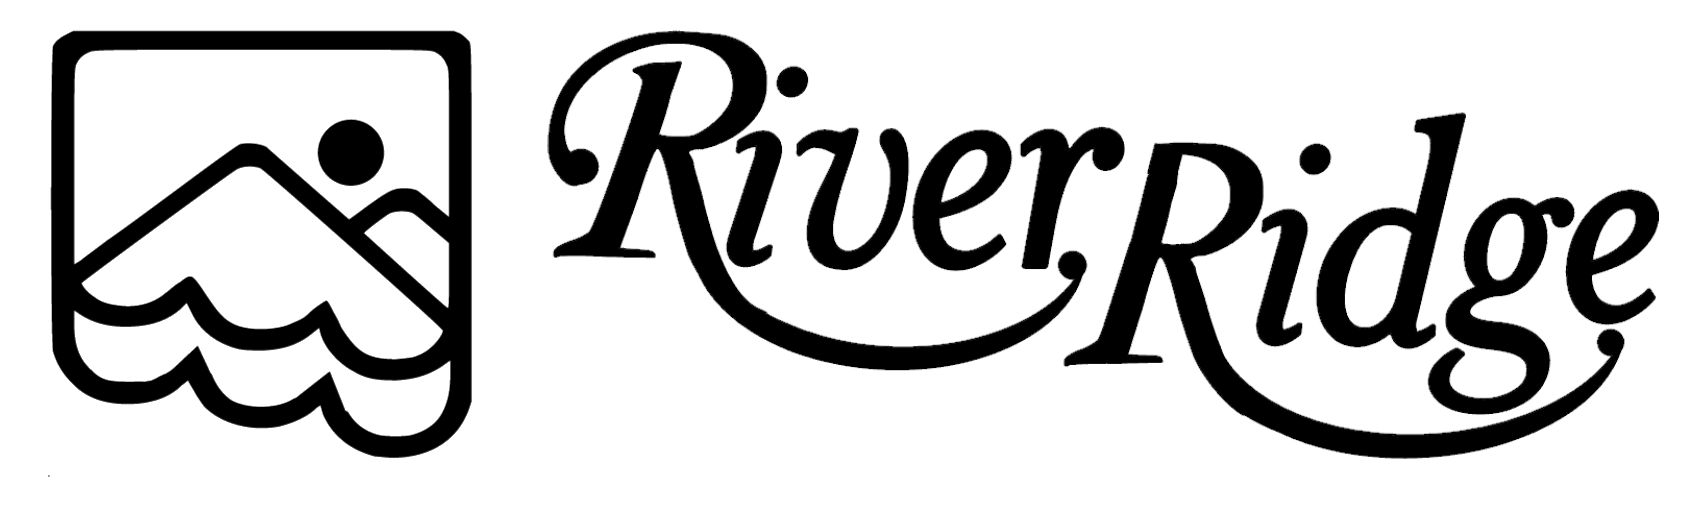 River Ridge Home Owners Assn.